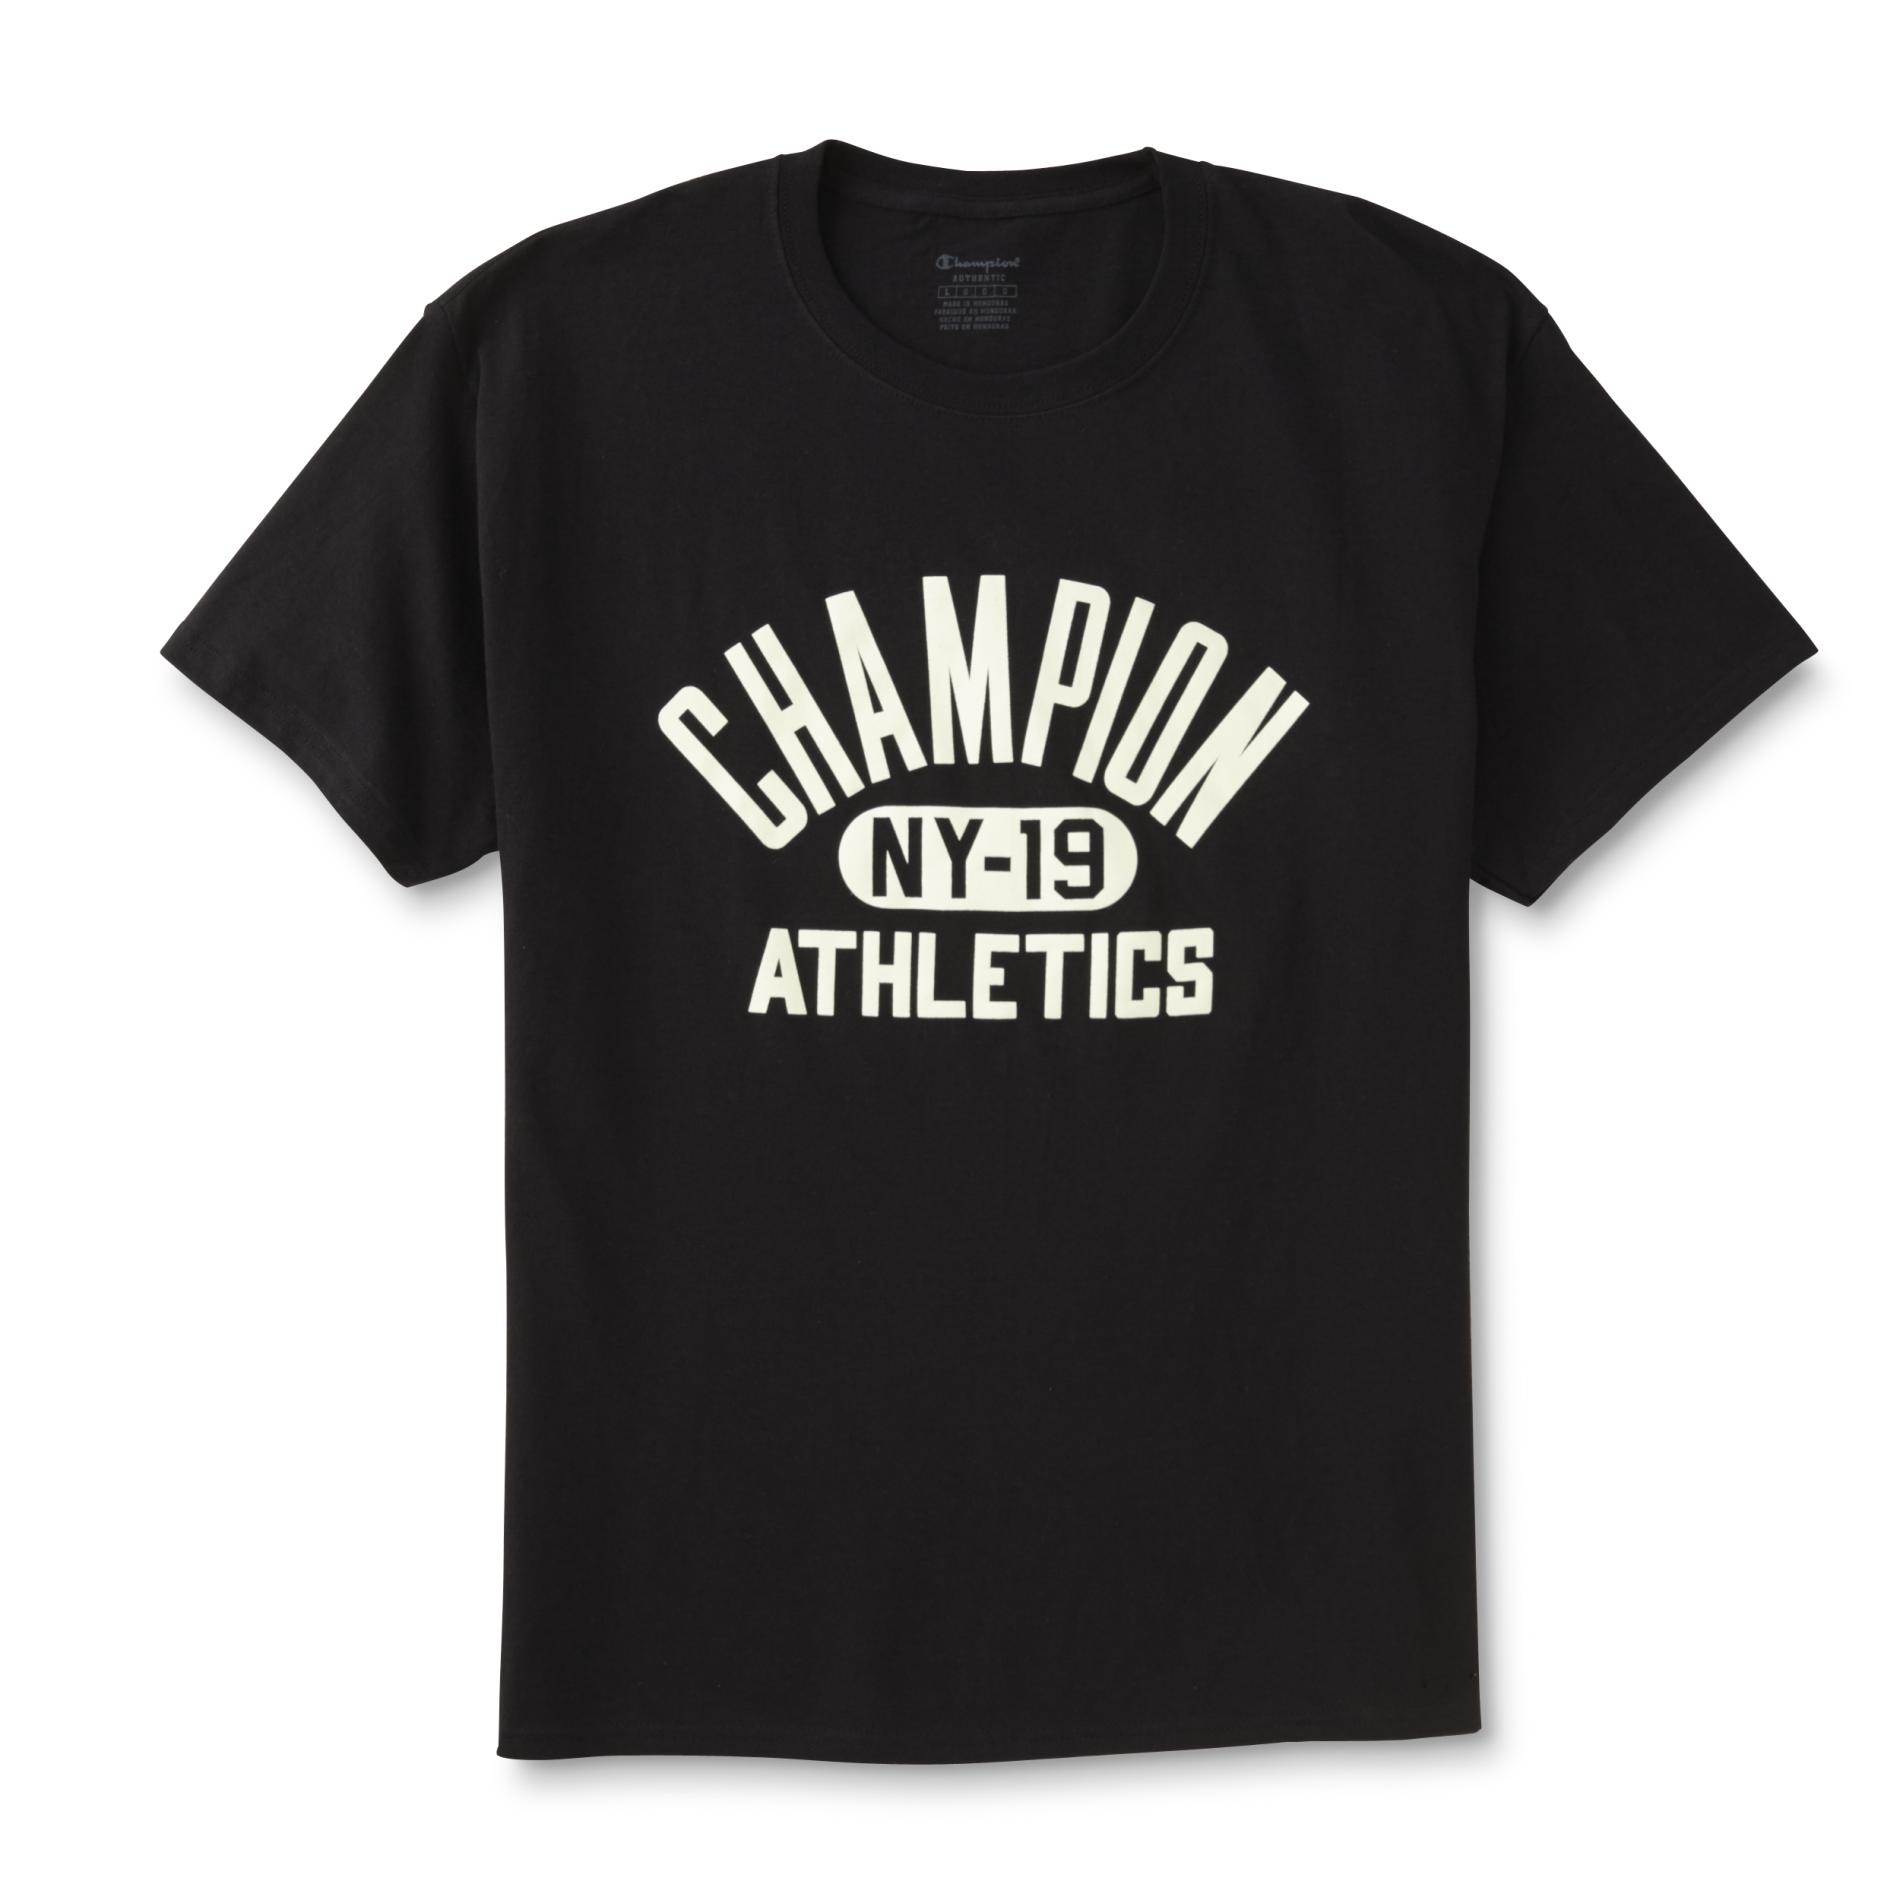 Champion Men's Graphic T-Shirt